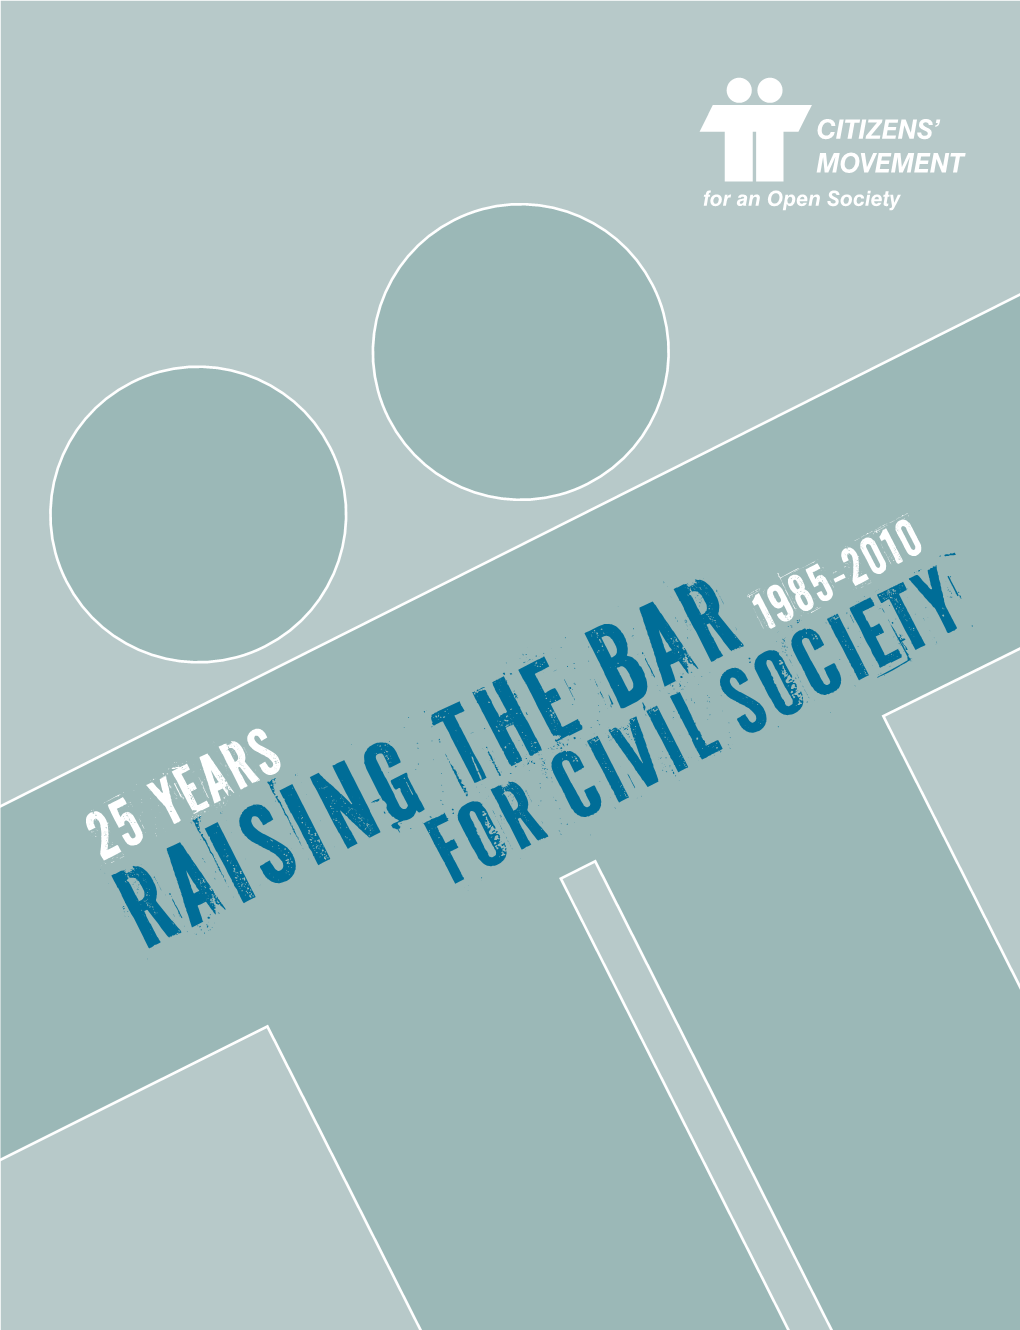 For Civil Society RAISING the BAR